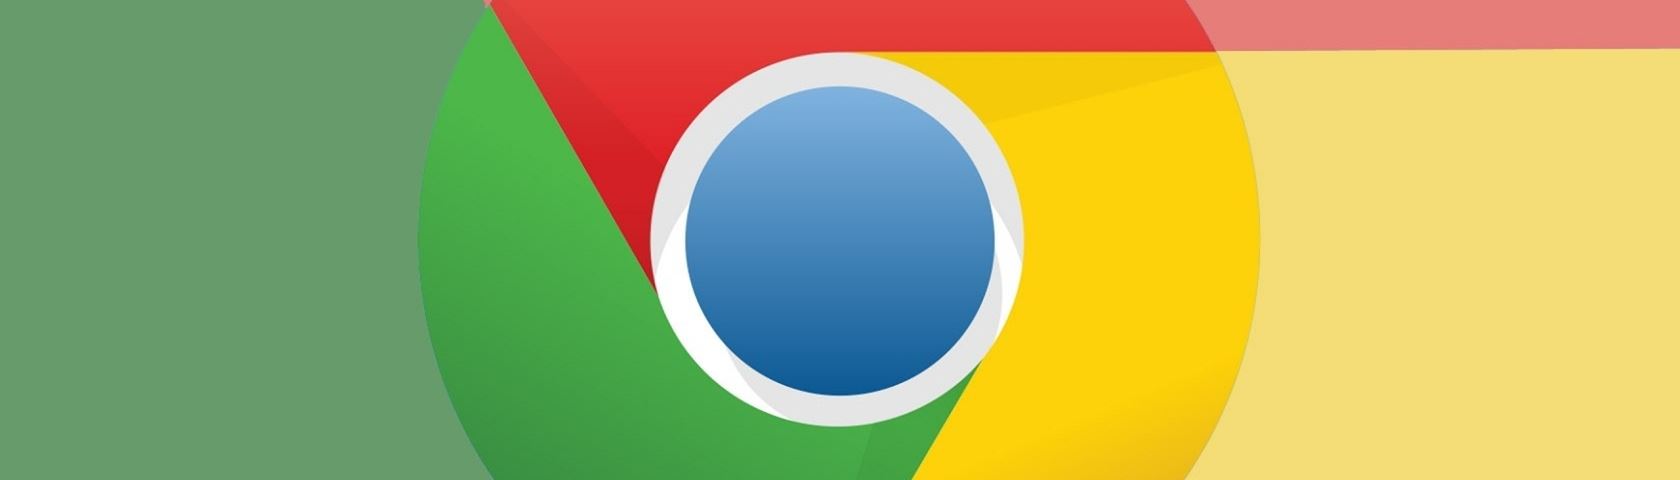 Google Chrome Logo Flat